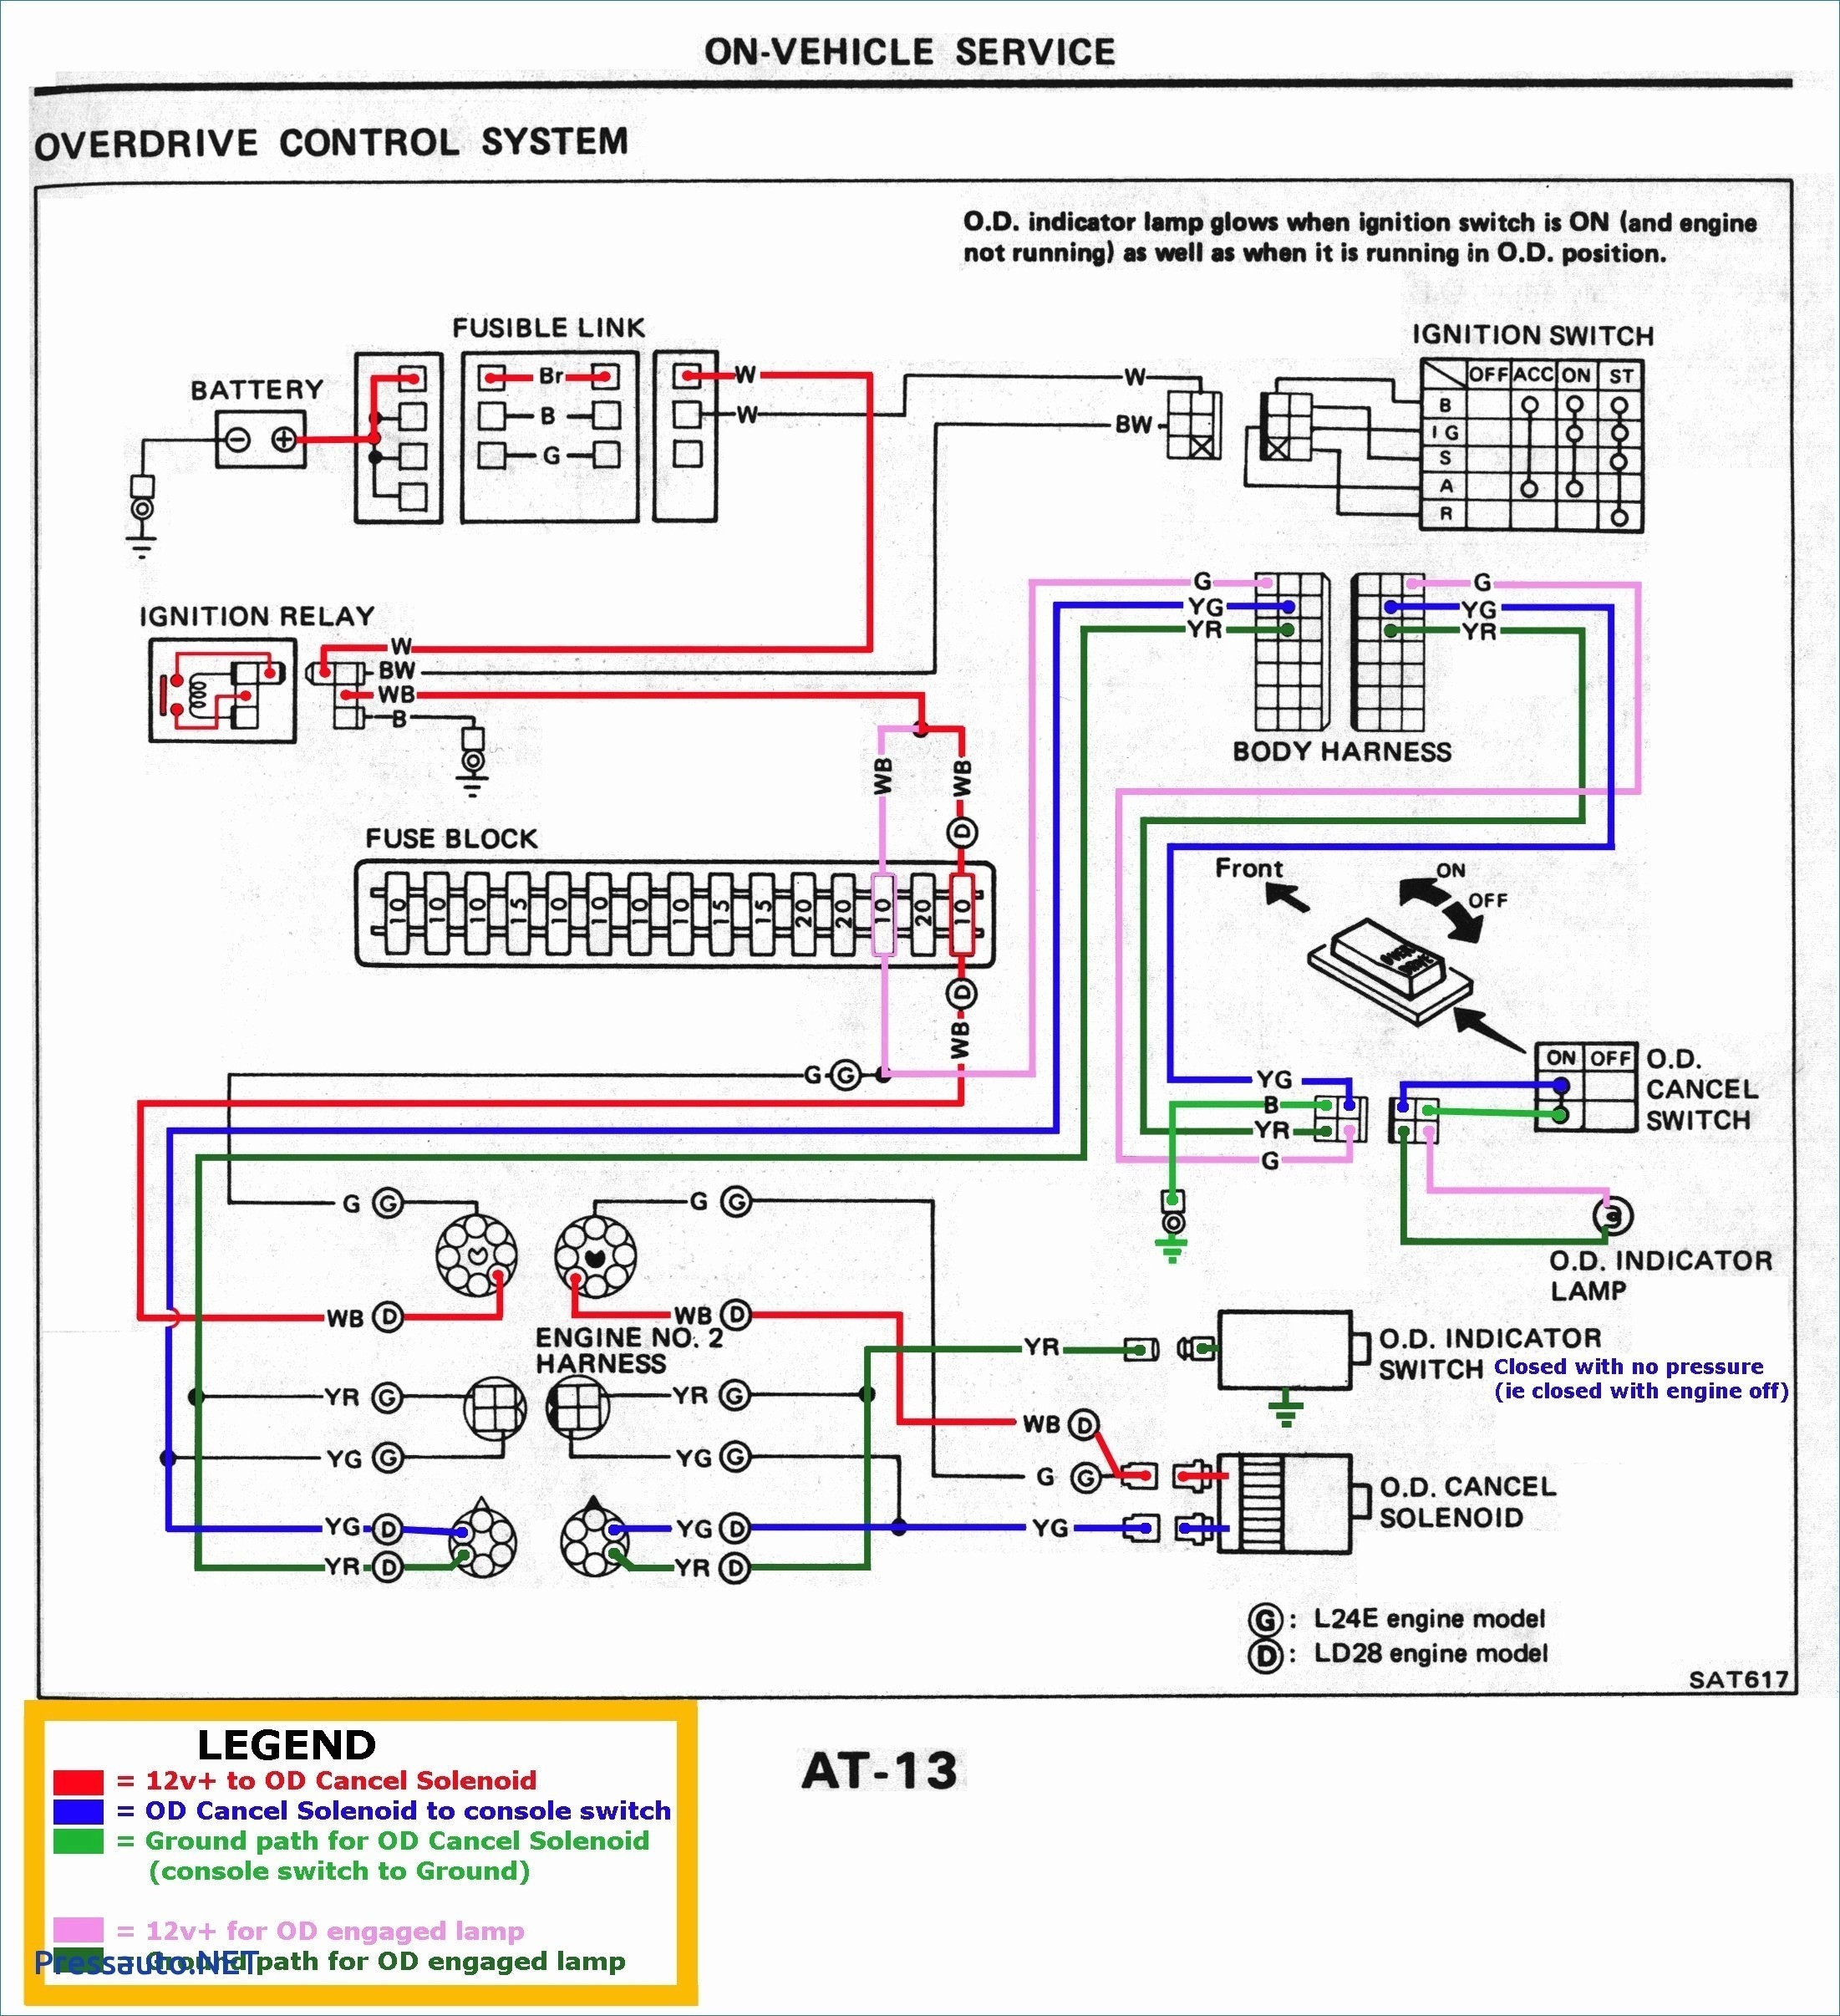 2004 Nissan Maxima Engine Diagram Fuse Box Diagram Peugeot 106 Automotive Wiring Diagrams Of 2004 Nissan Maxima Engine Diagram